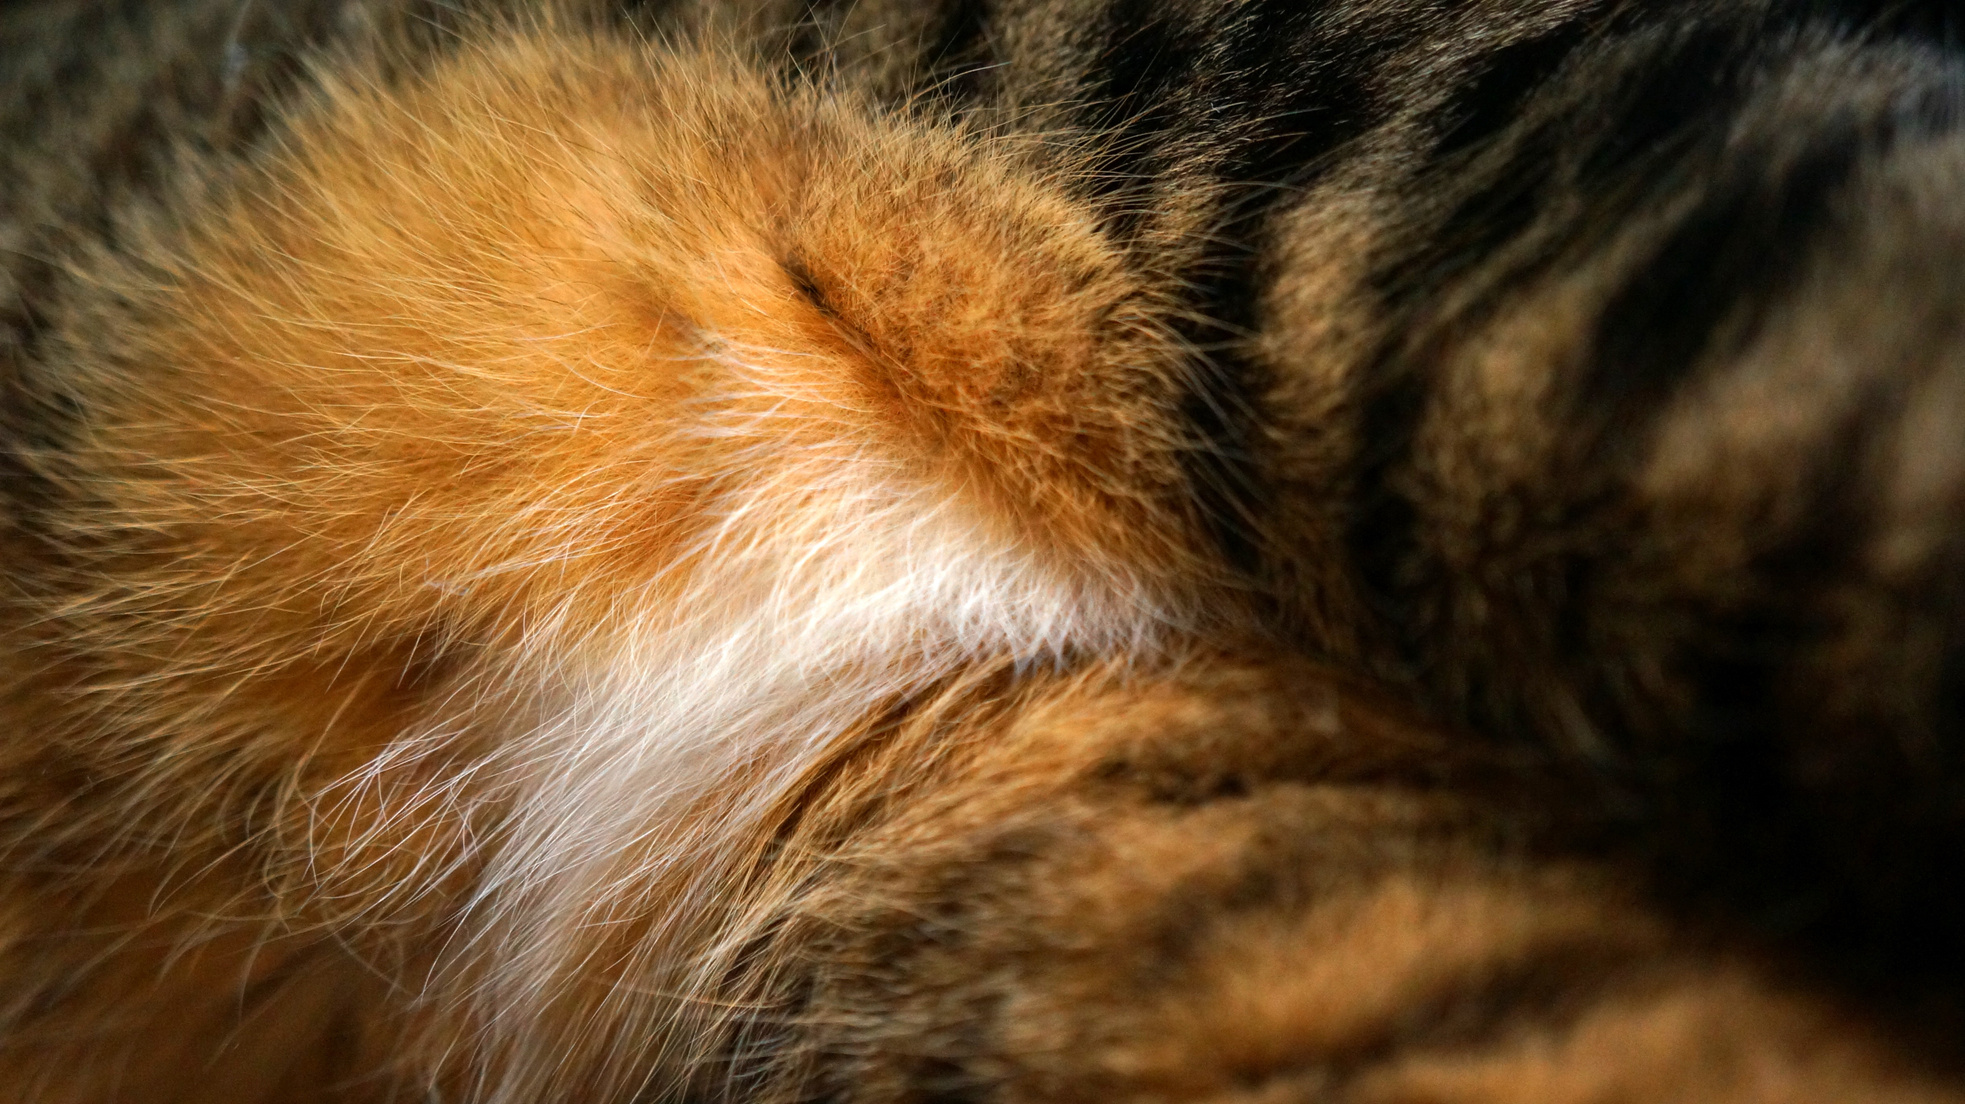 Cat Fur Texture